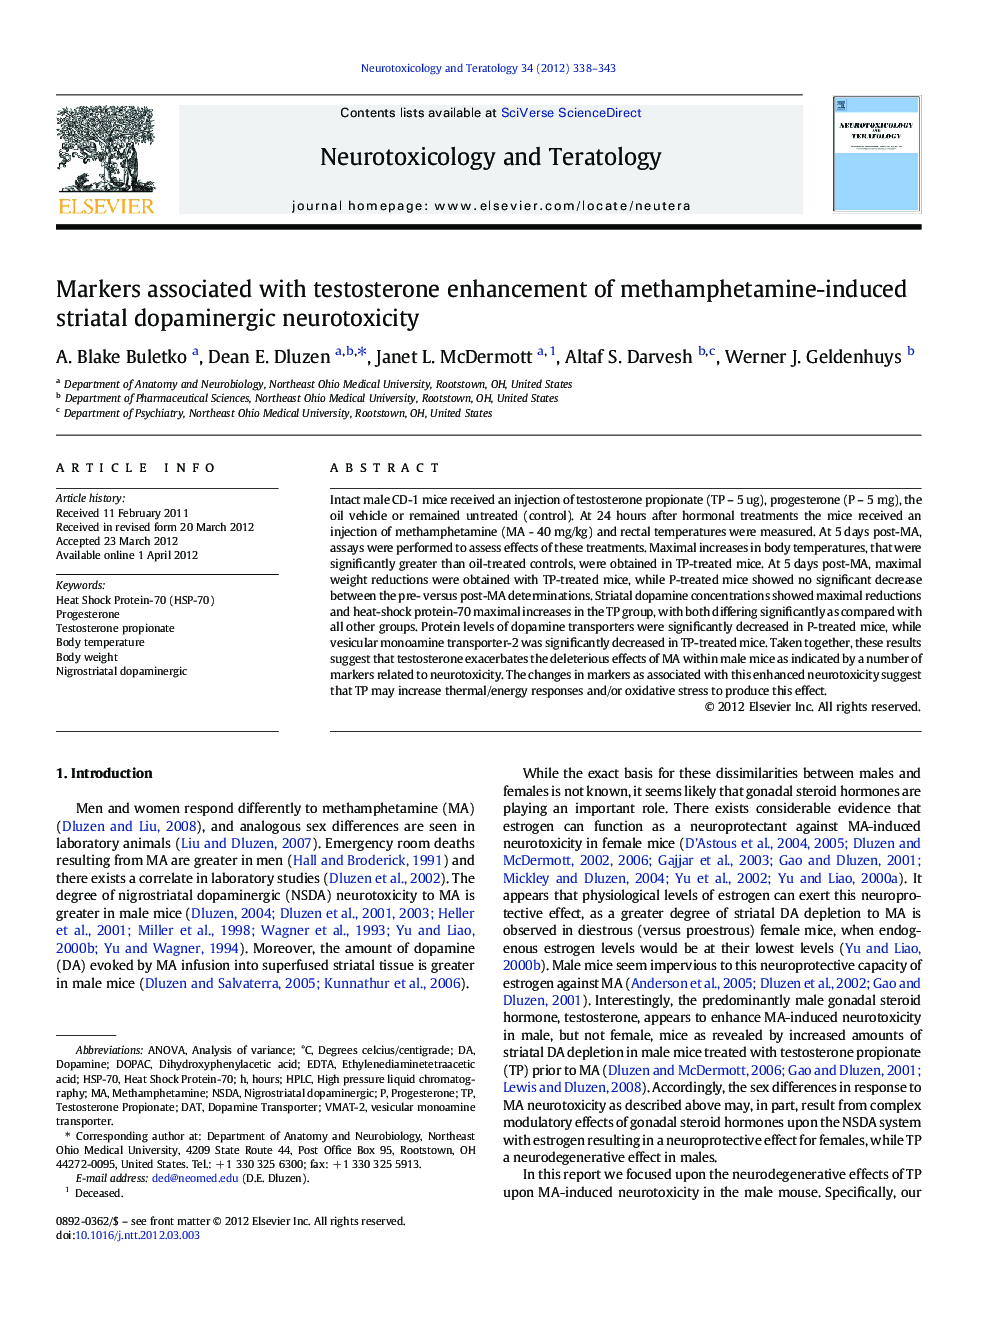 Markers associated with testosterone enhancement of methamphetamine-induced striatal dopaminergic neurotoxicity